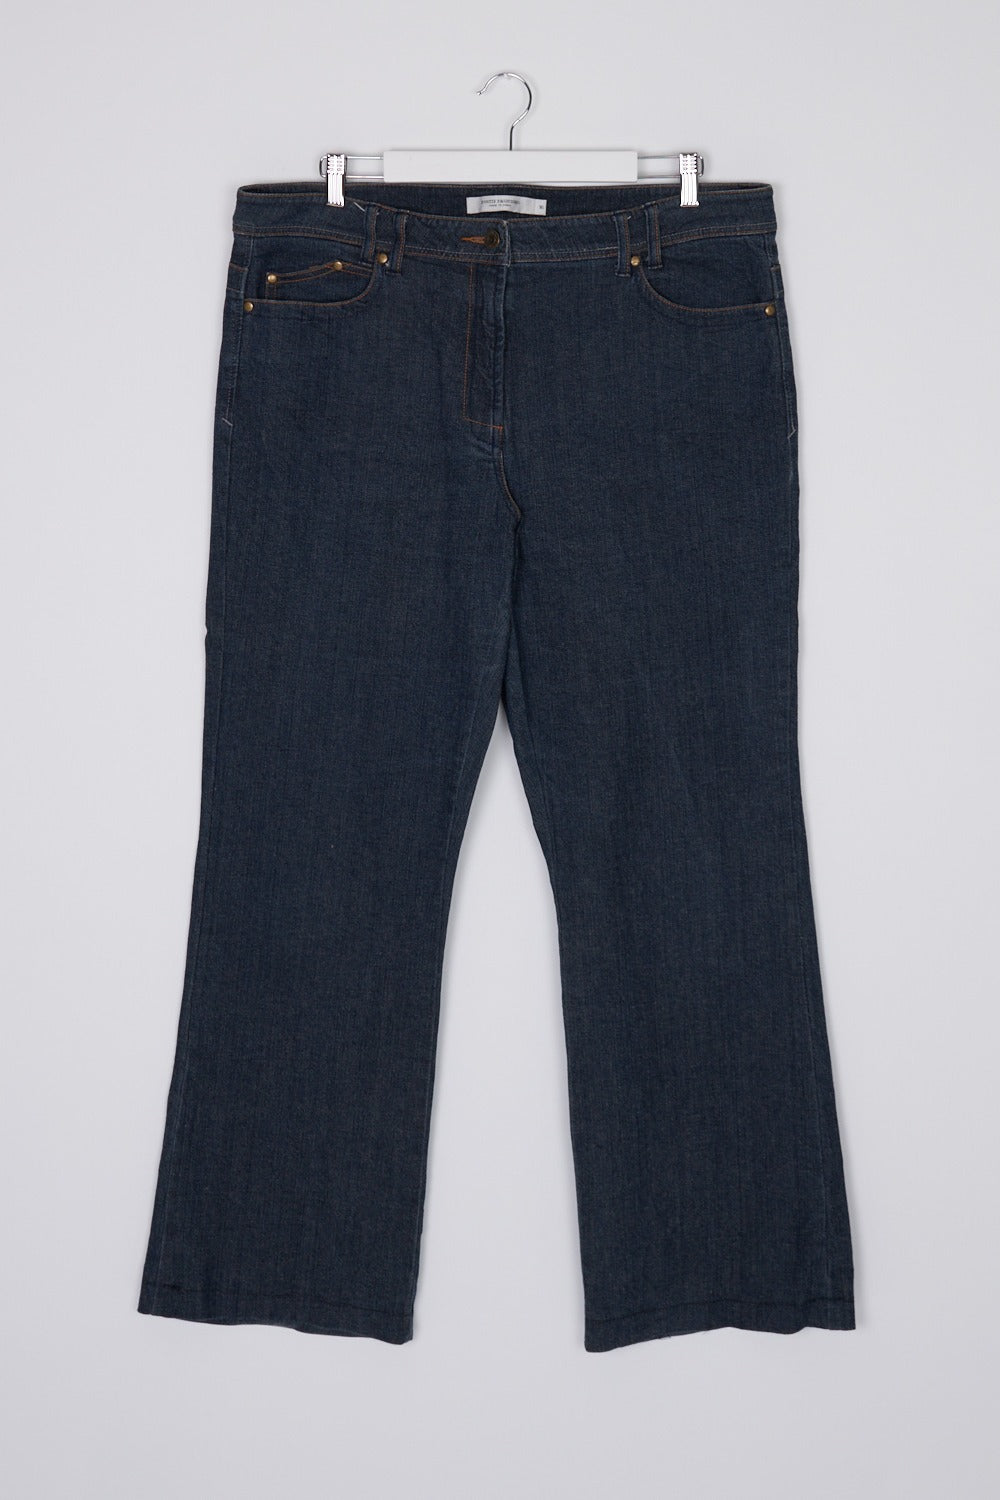 Postie Blue Straight Leg Jeans AU 16 / 34